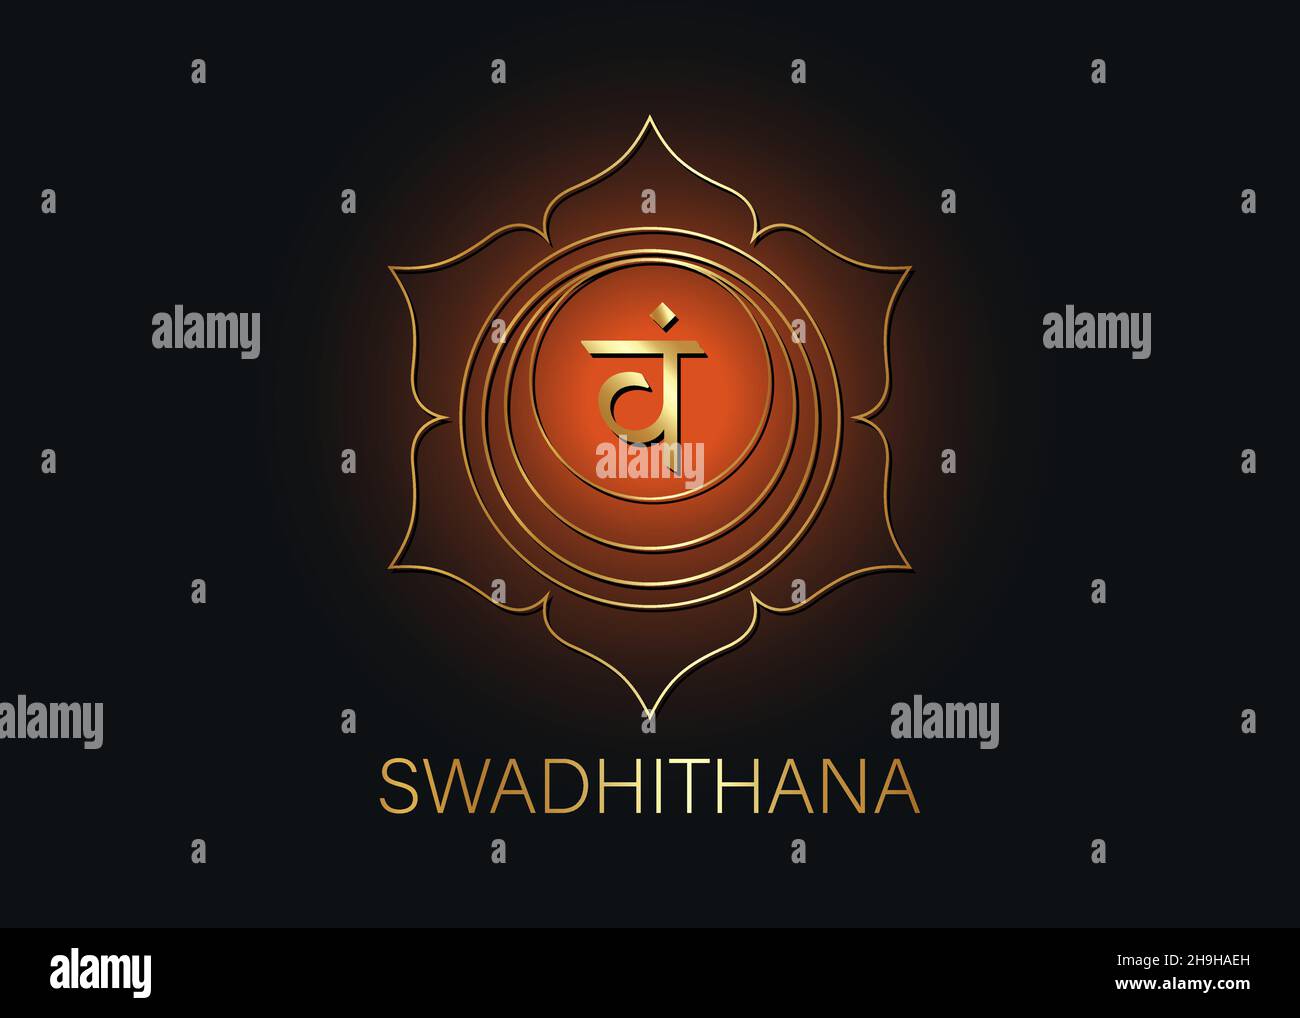 Zweites Swadhisthana-Chakra mit dem Hindu-Sanskrit-Samenmantra VAM. Orange und Gold flaches Design-Stil Symbol für Meditation, Yoga. Logo-Vorlage Vect Stock Vektor